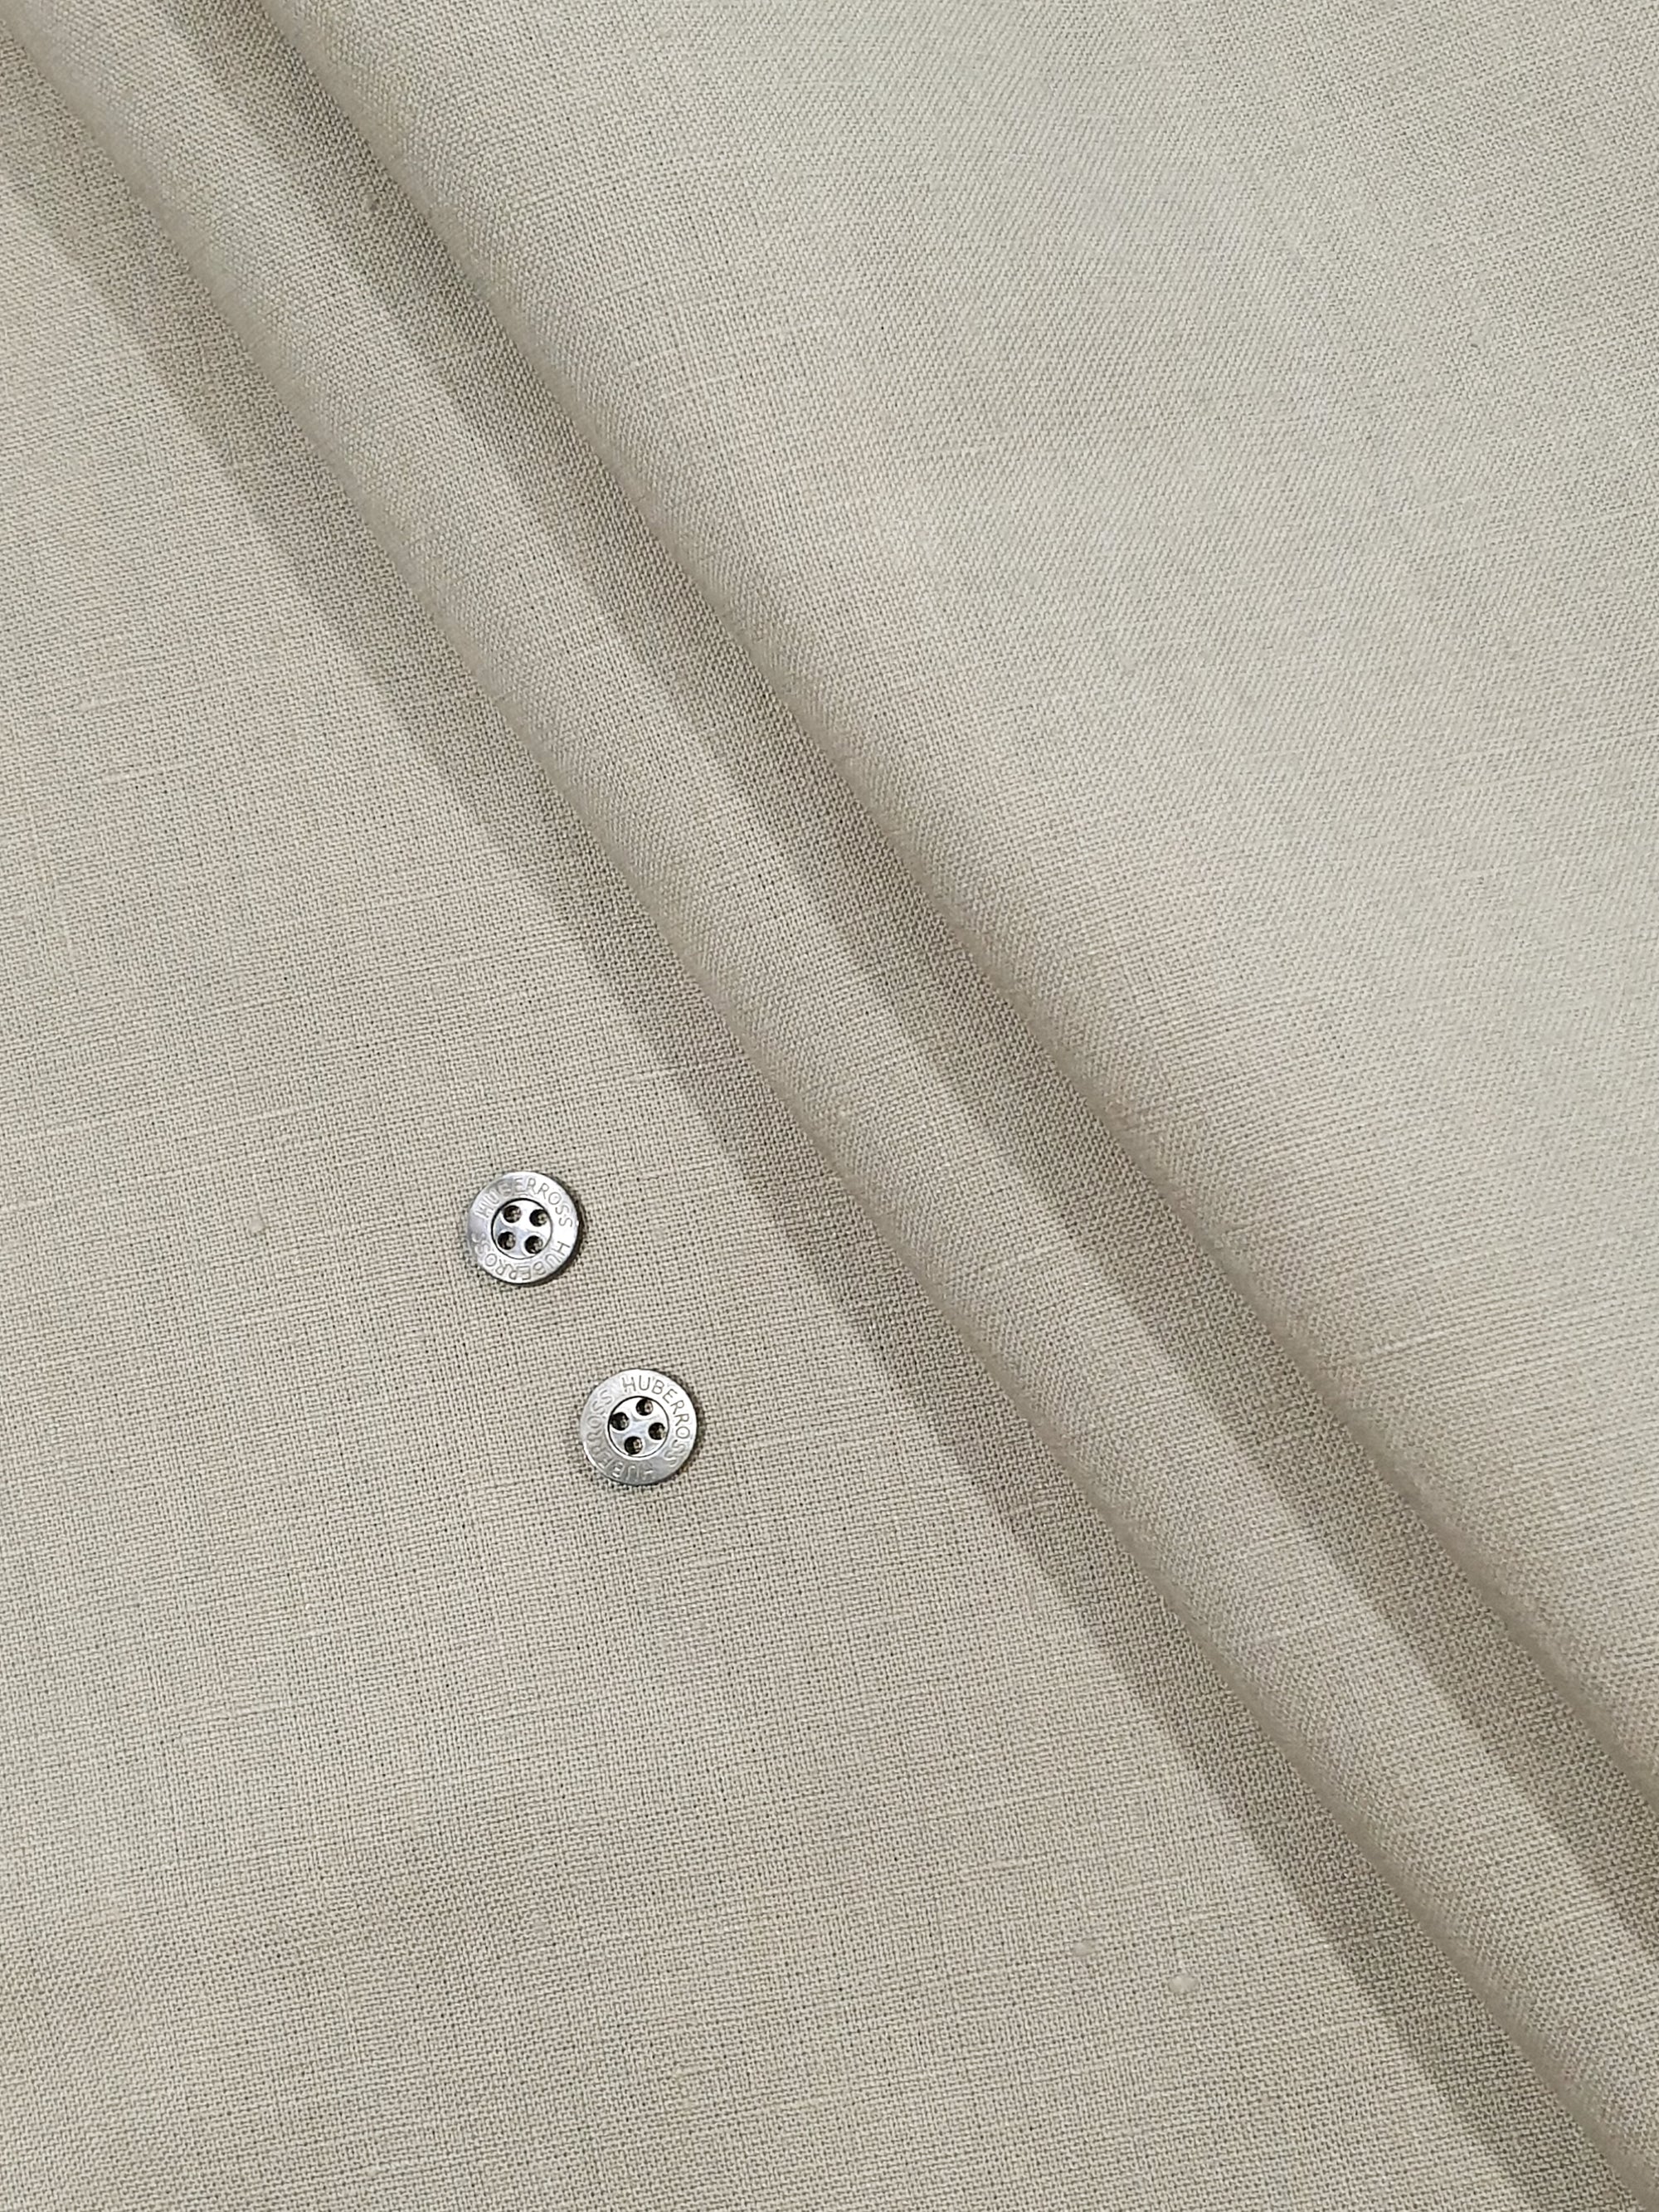 950.056 Silver Grey Irish Linen Suiting Fabrics